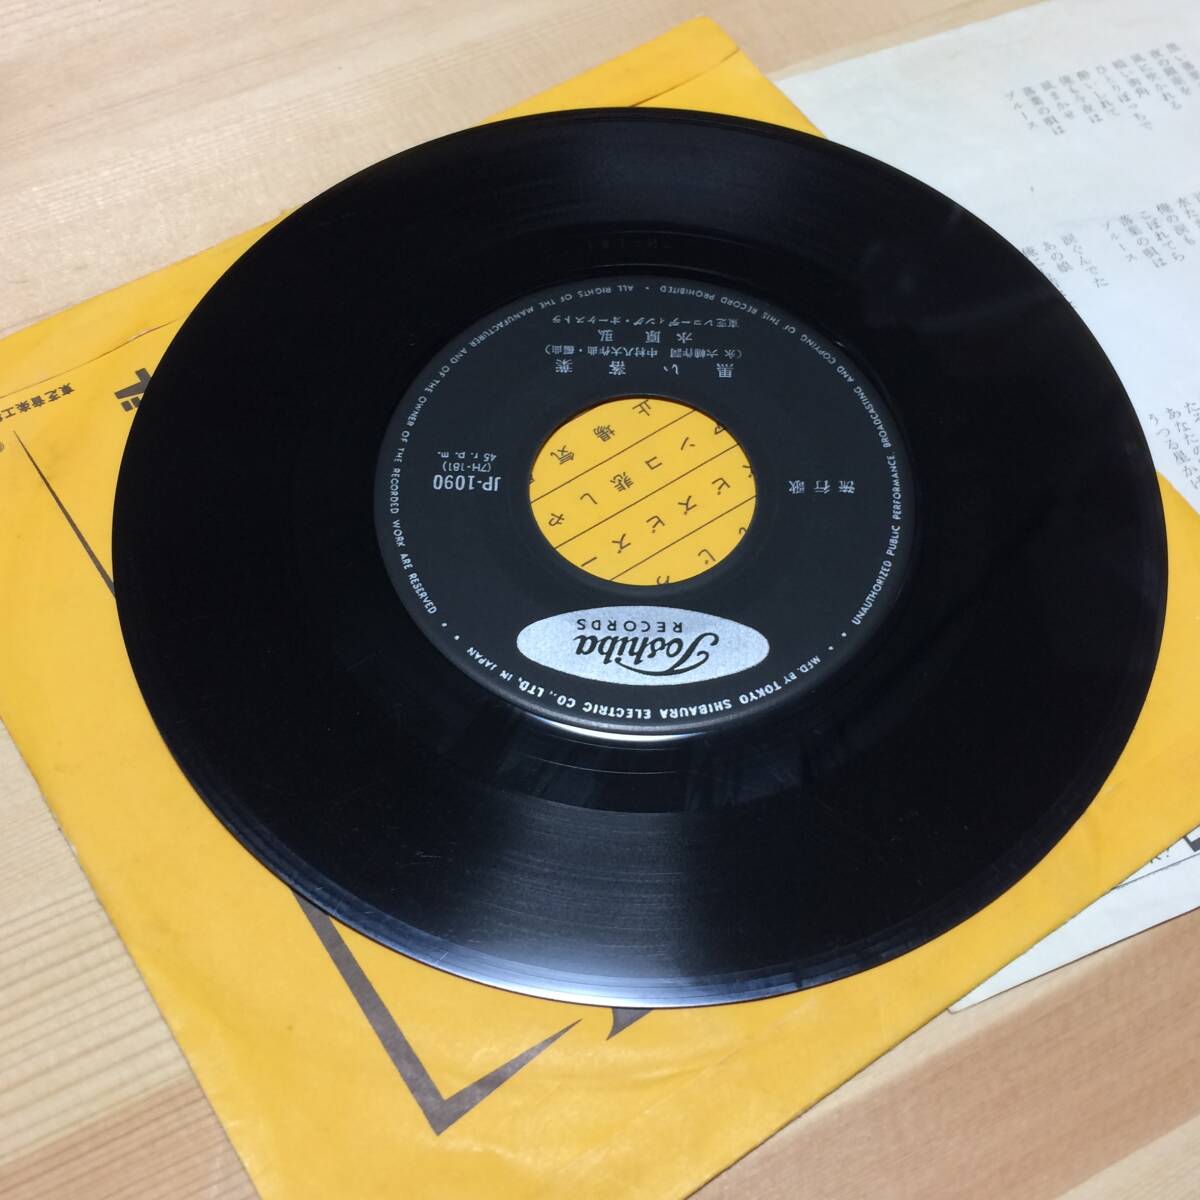  water .. black .. leaf / yellow .. Bigi nJP-1090 Toshiba Showa era song EP analogue record record single 7 -inch 7Inch doughnuts record 